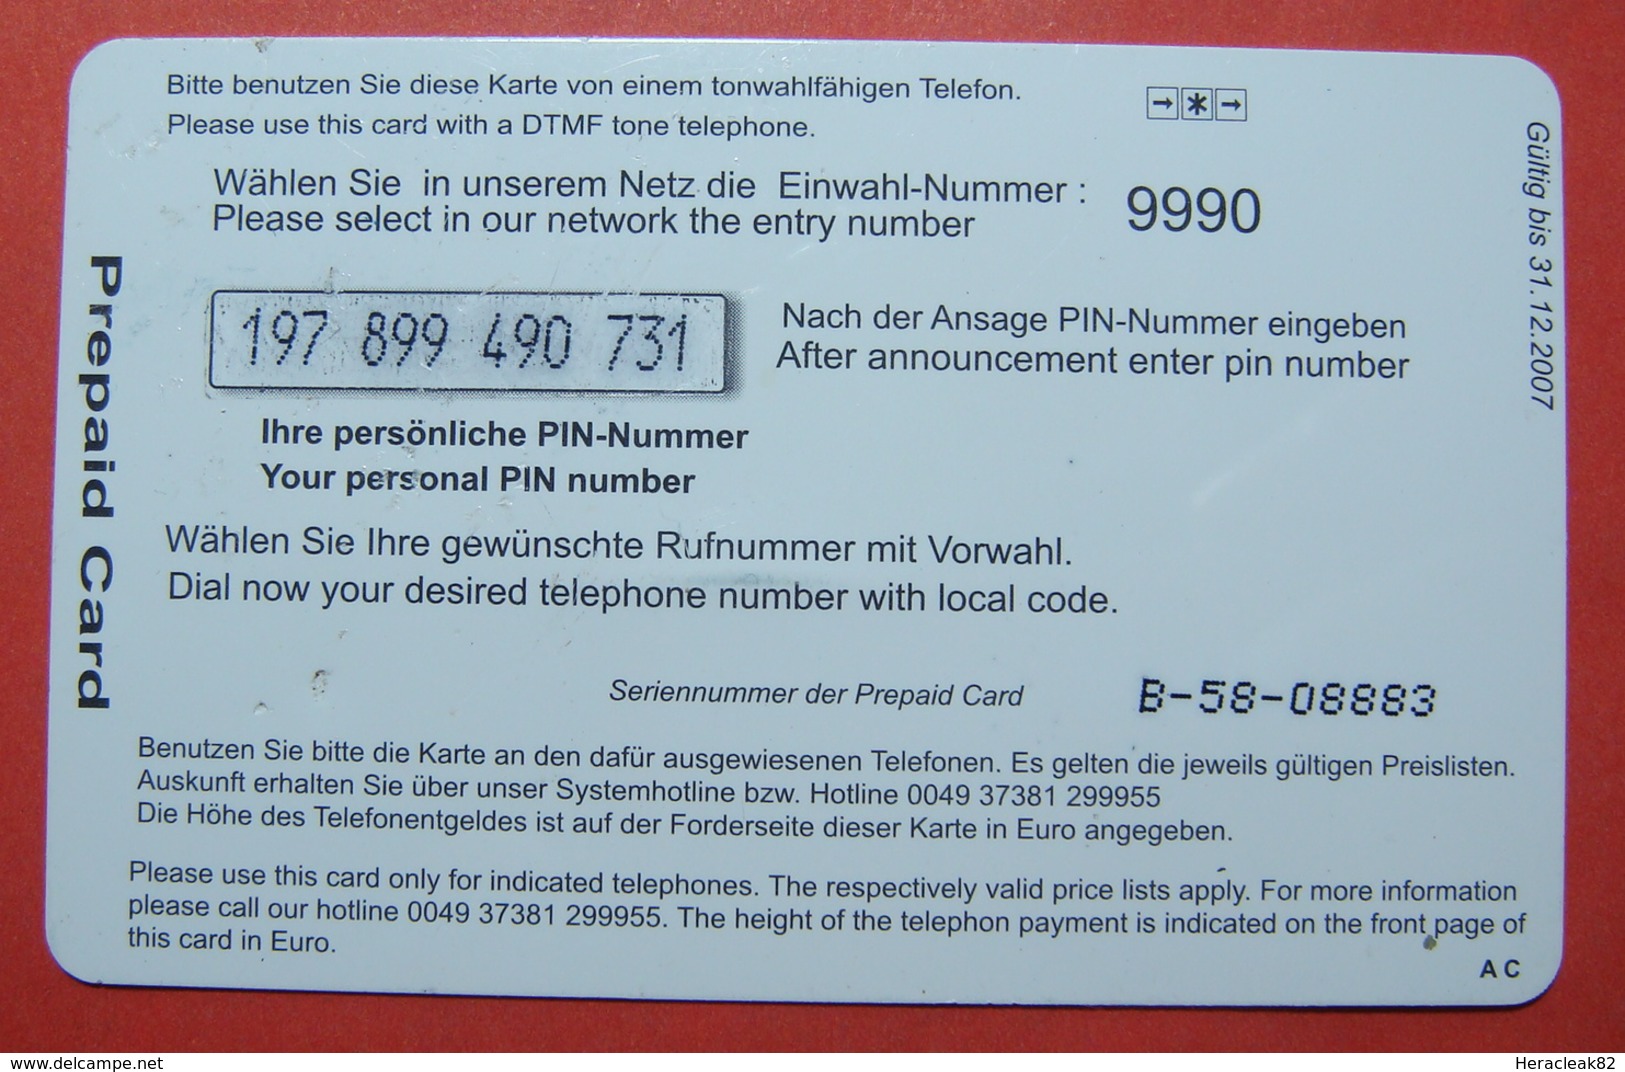 Serie B-58-08..., German Army In Kosovo Prepaid Phone CARD 25 Euro Used Operator KBIMPULS *Satellite* - Kosovo